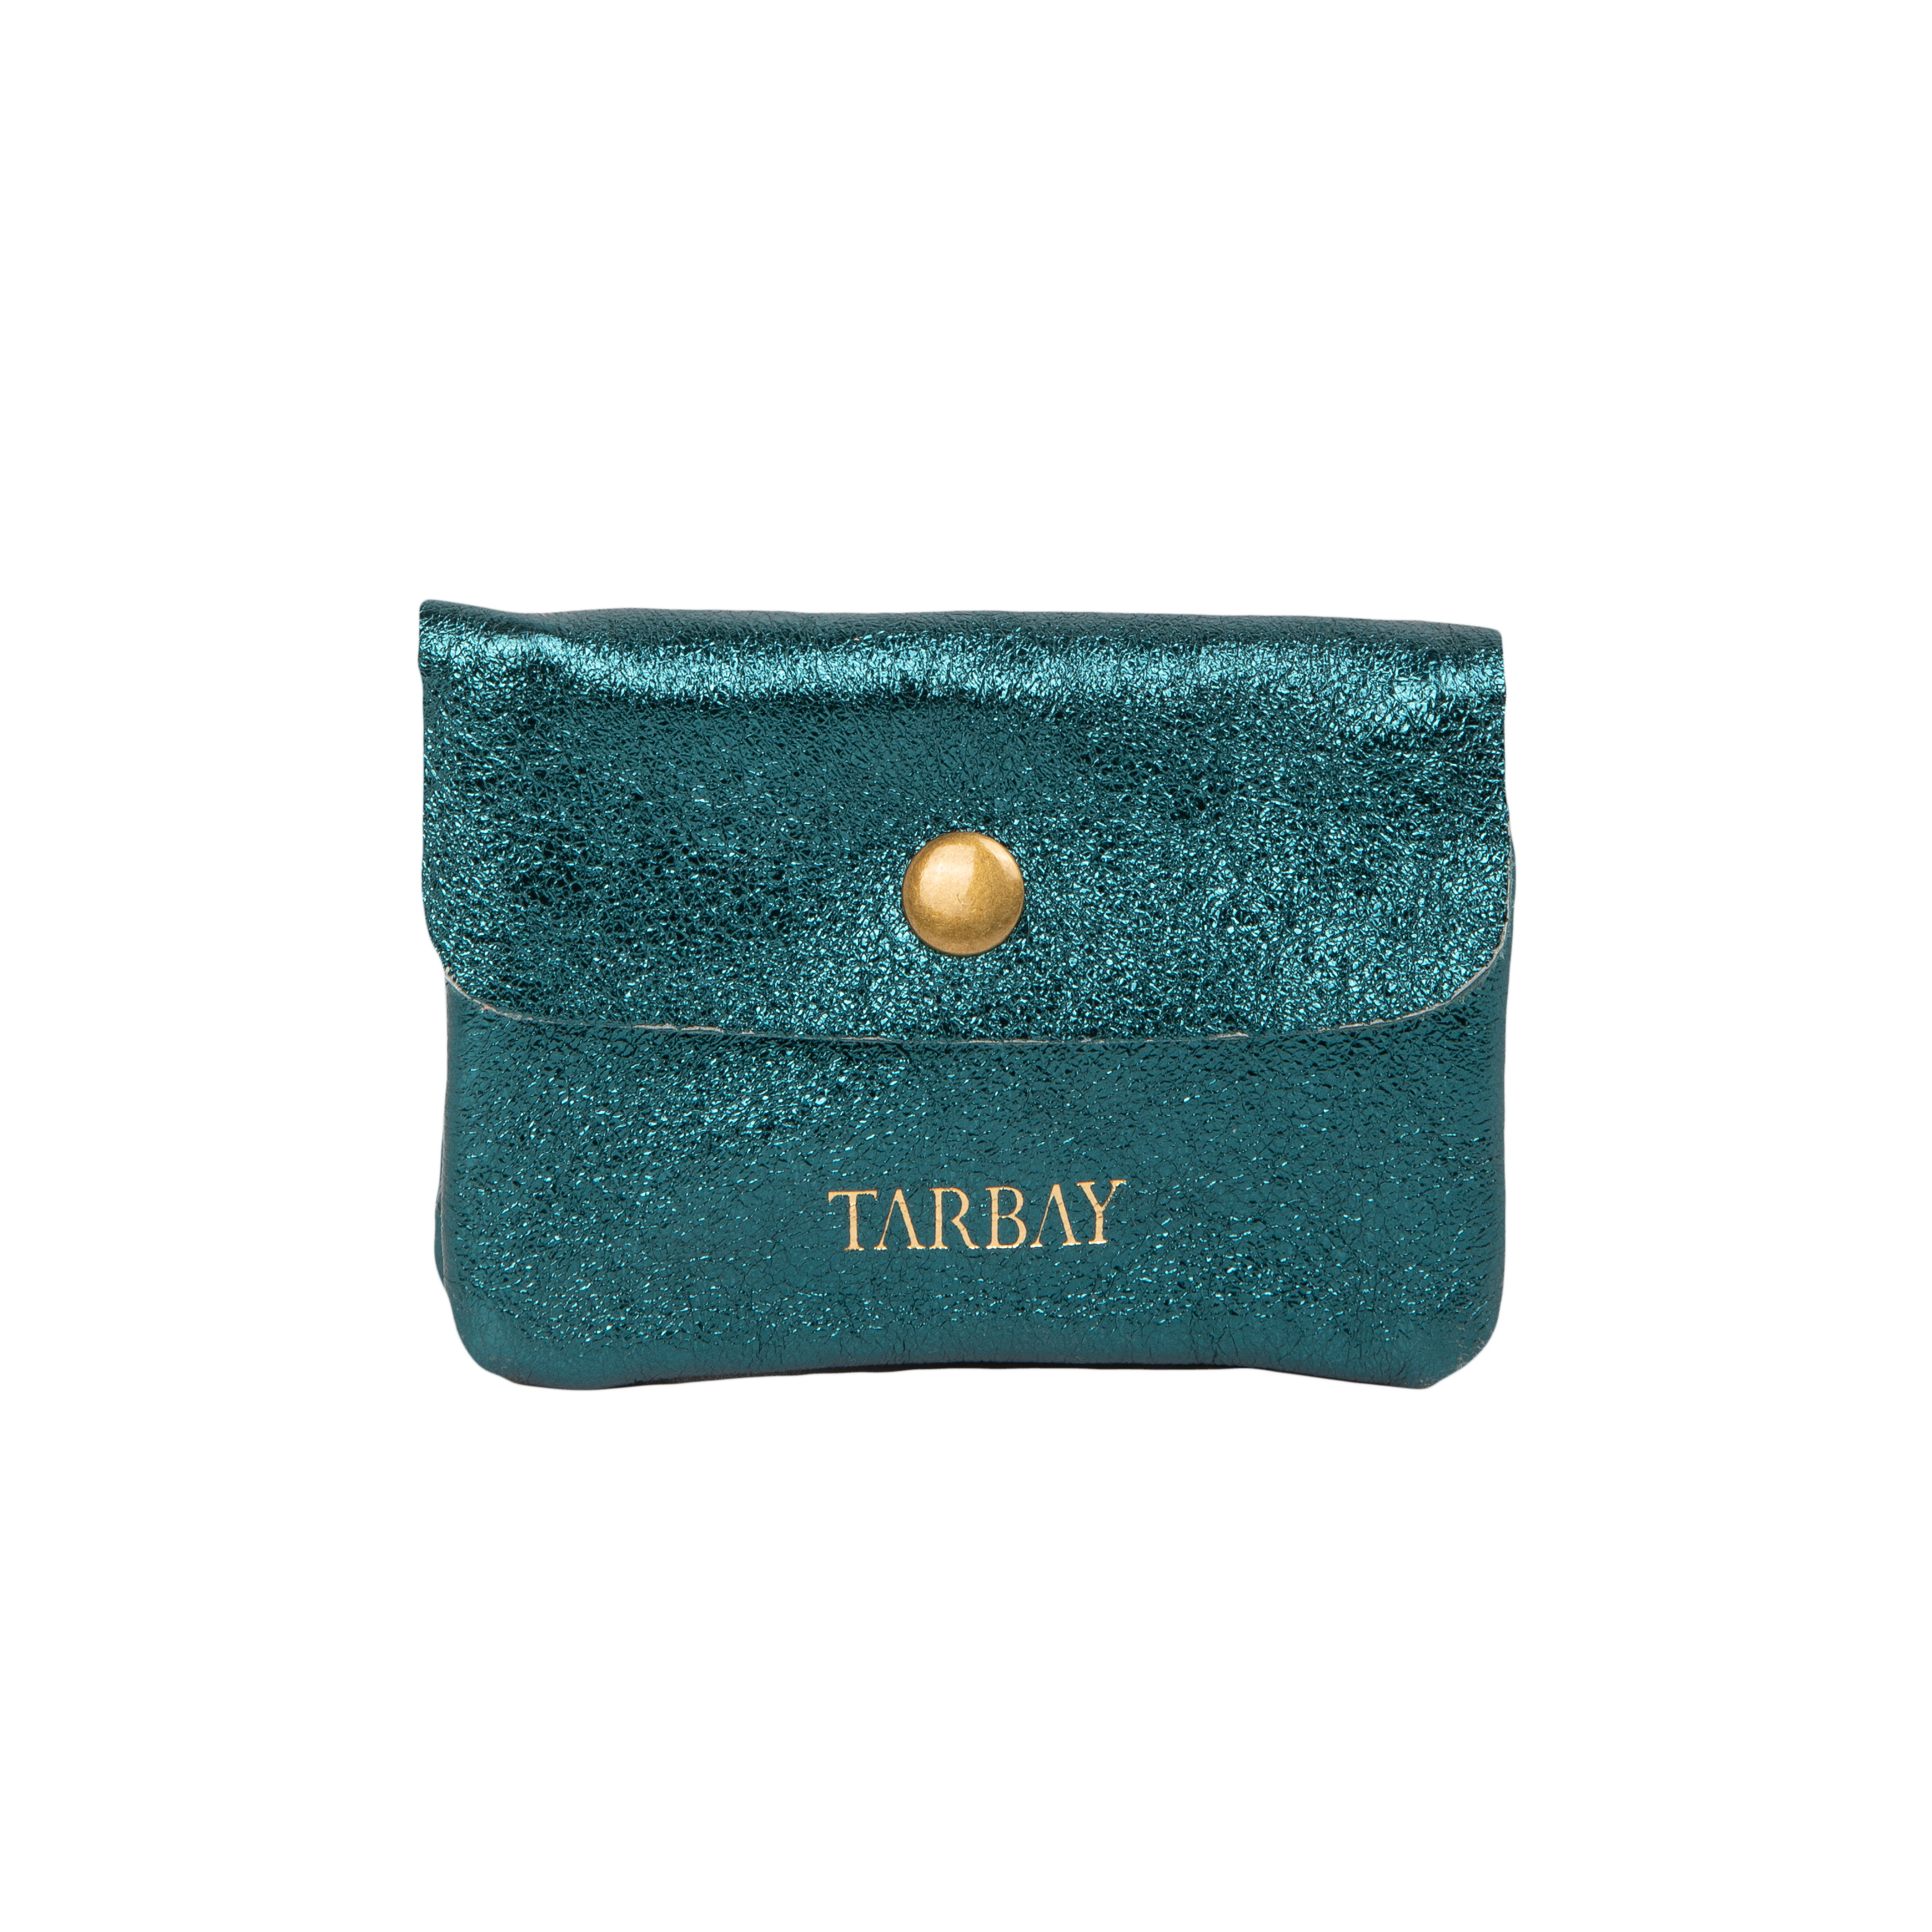 Blair Genuine Leather Wallet #1 - Metallic Turquoise Wallets TARBAY   